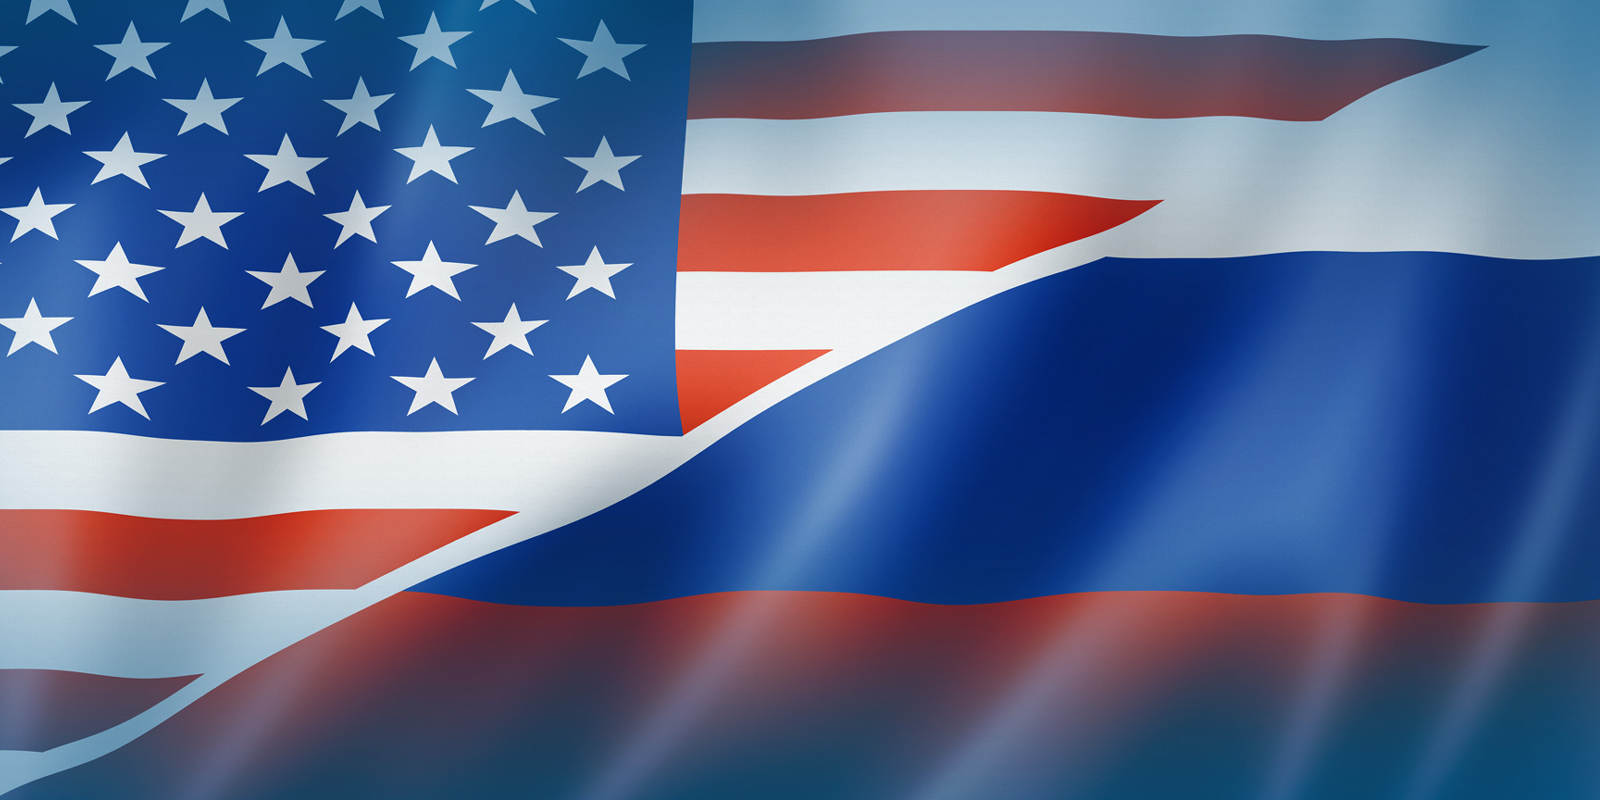 Russian Parliament Introduces New Legislation in Retaliation for U.S. Sanctions